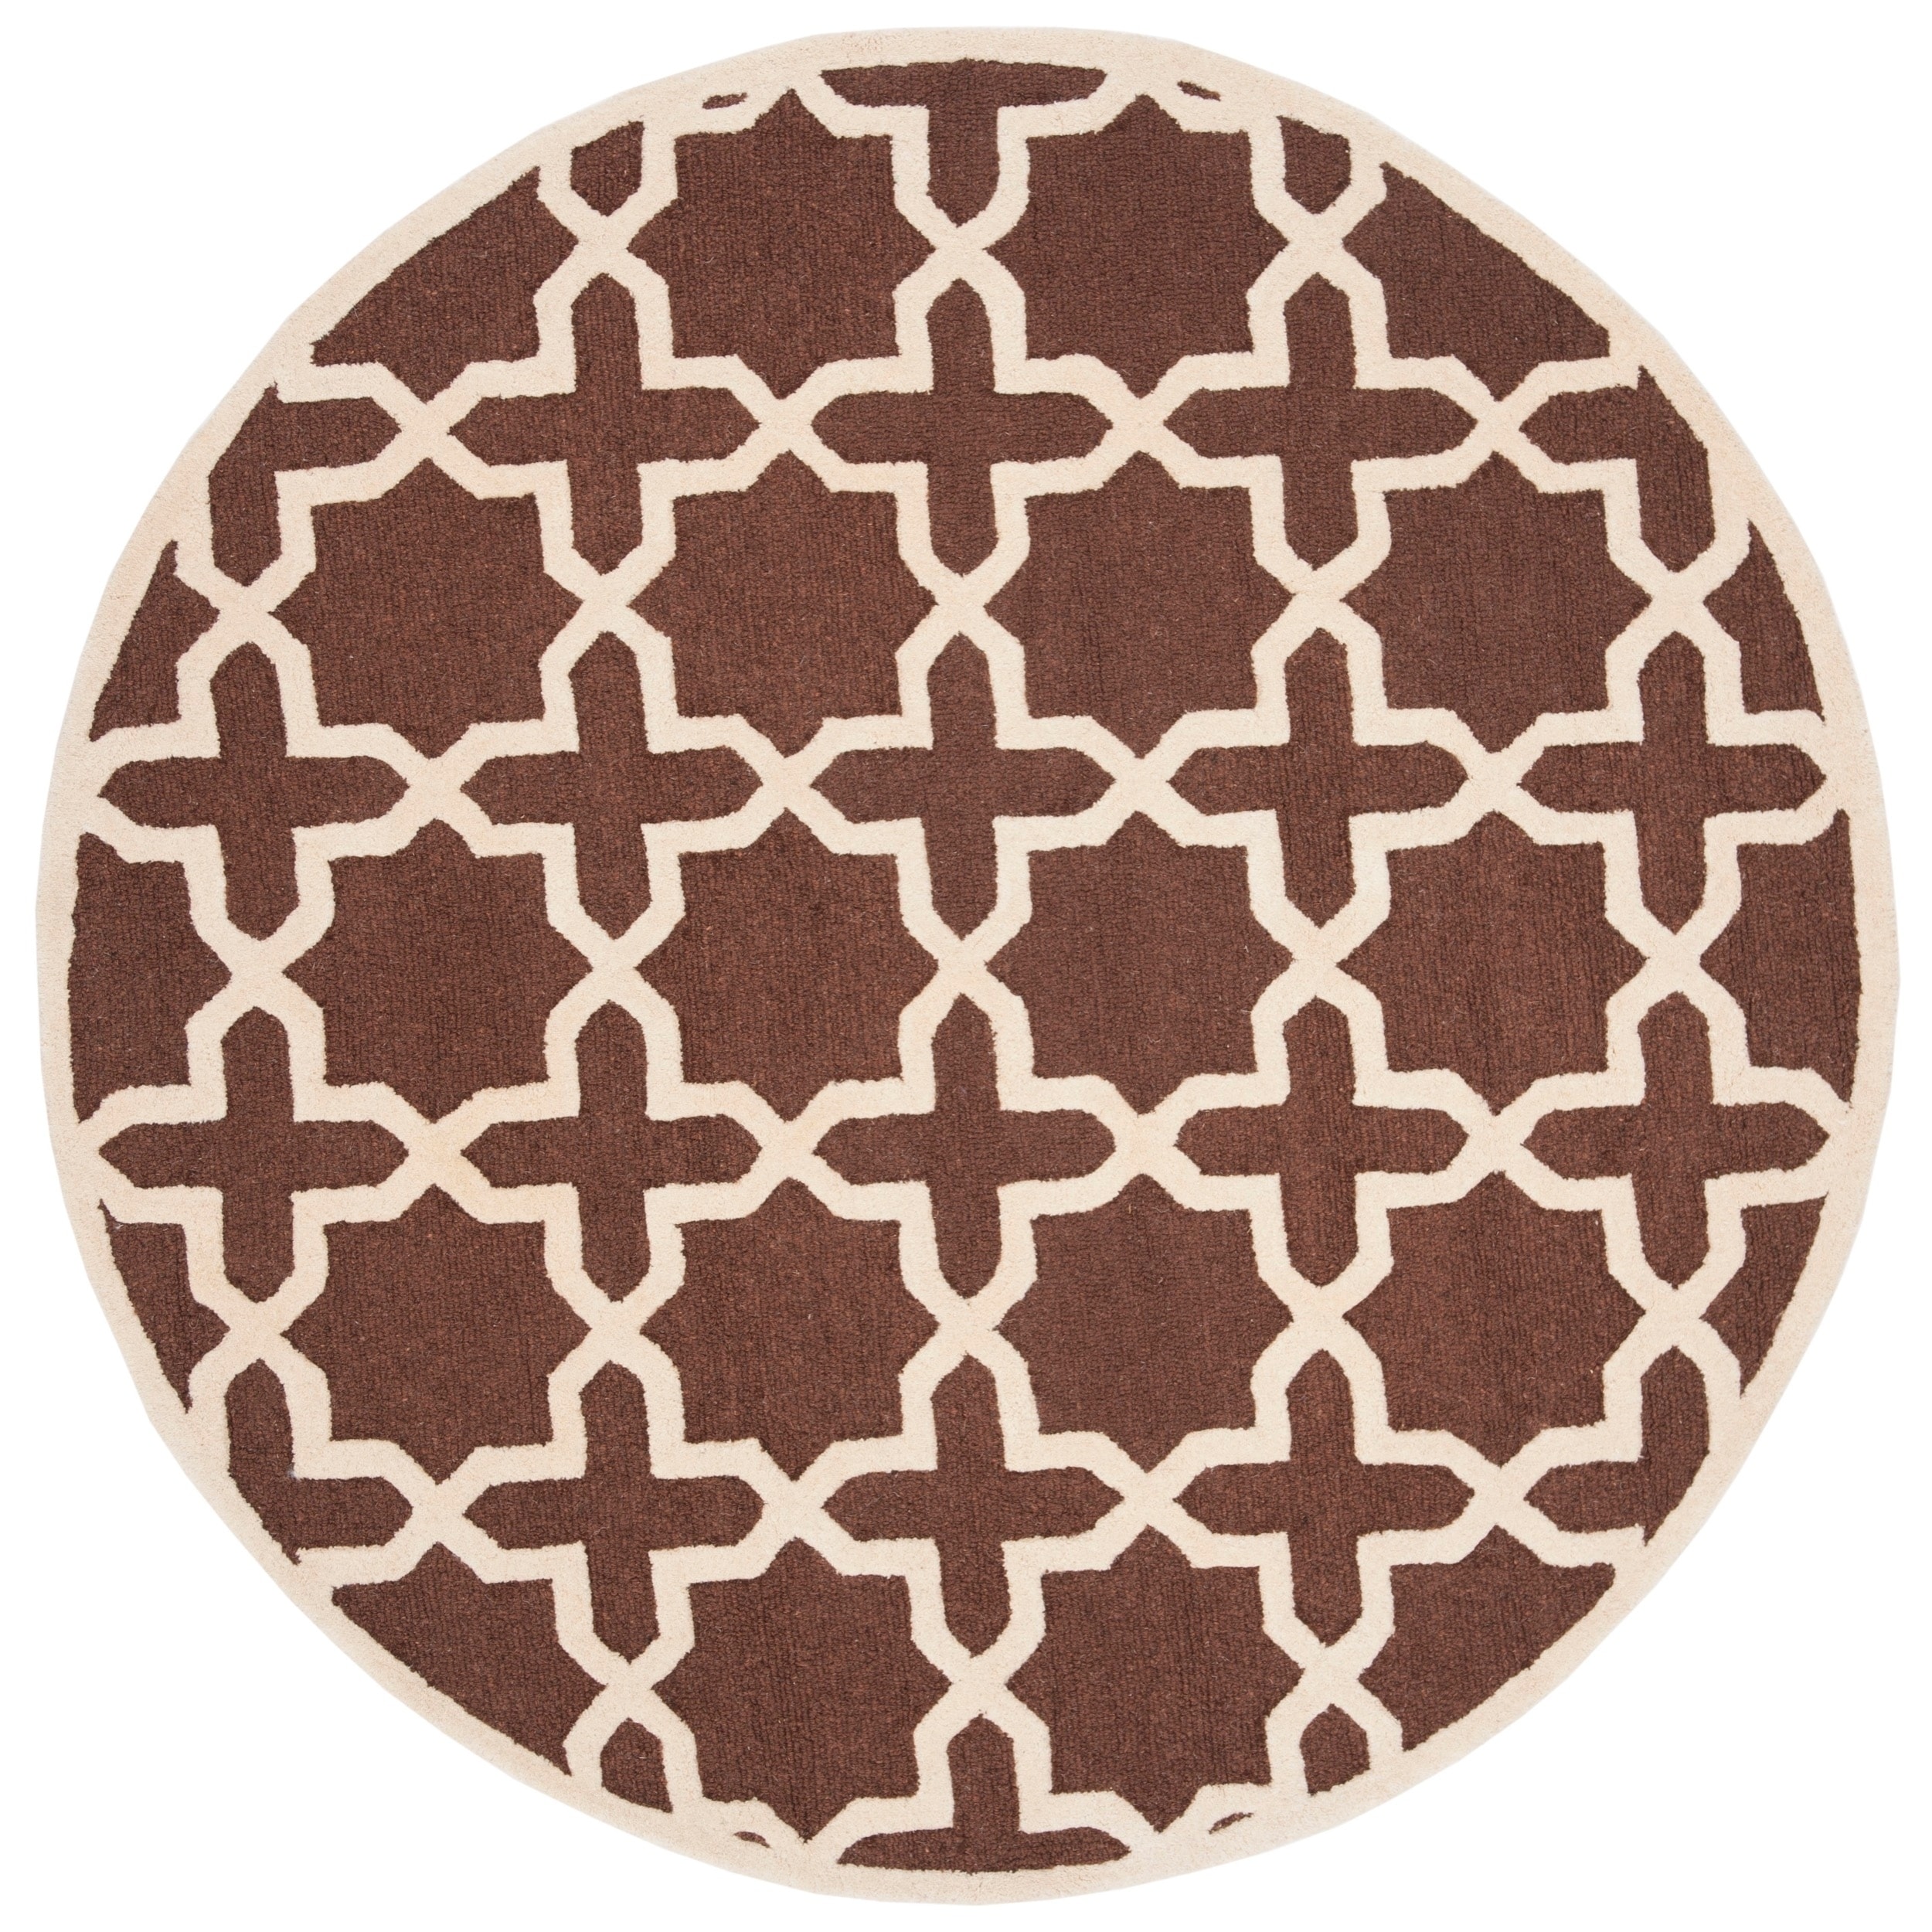 Safavieh Handmade Moroccan Cambridge Dark Brown/ Ivory Wool Rug (8 Round)